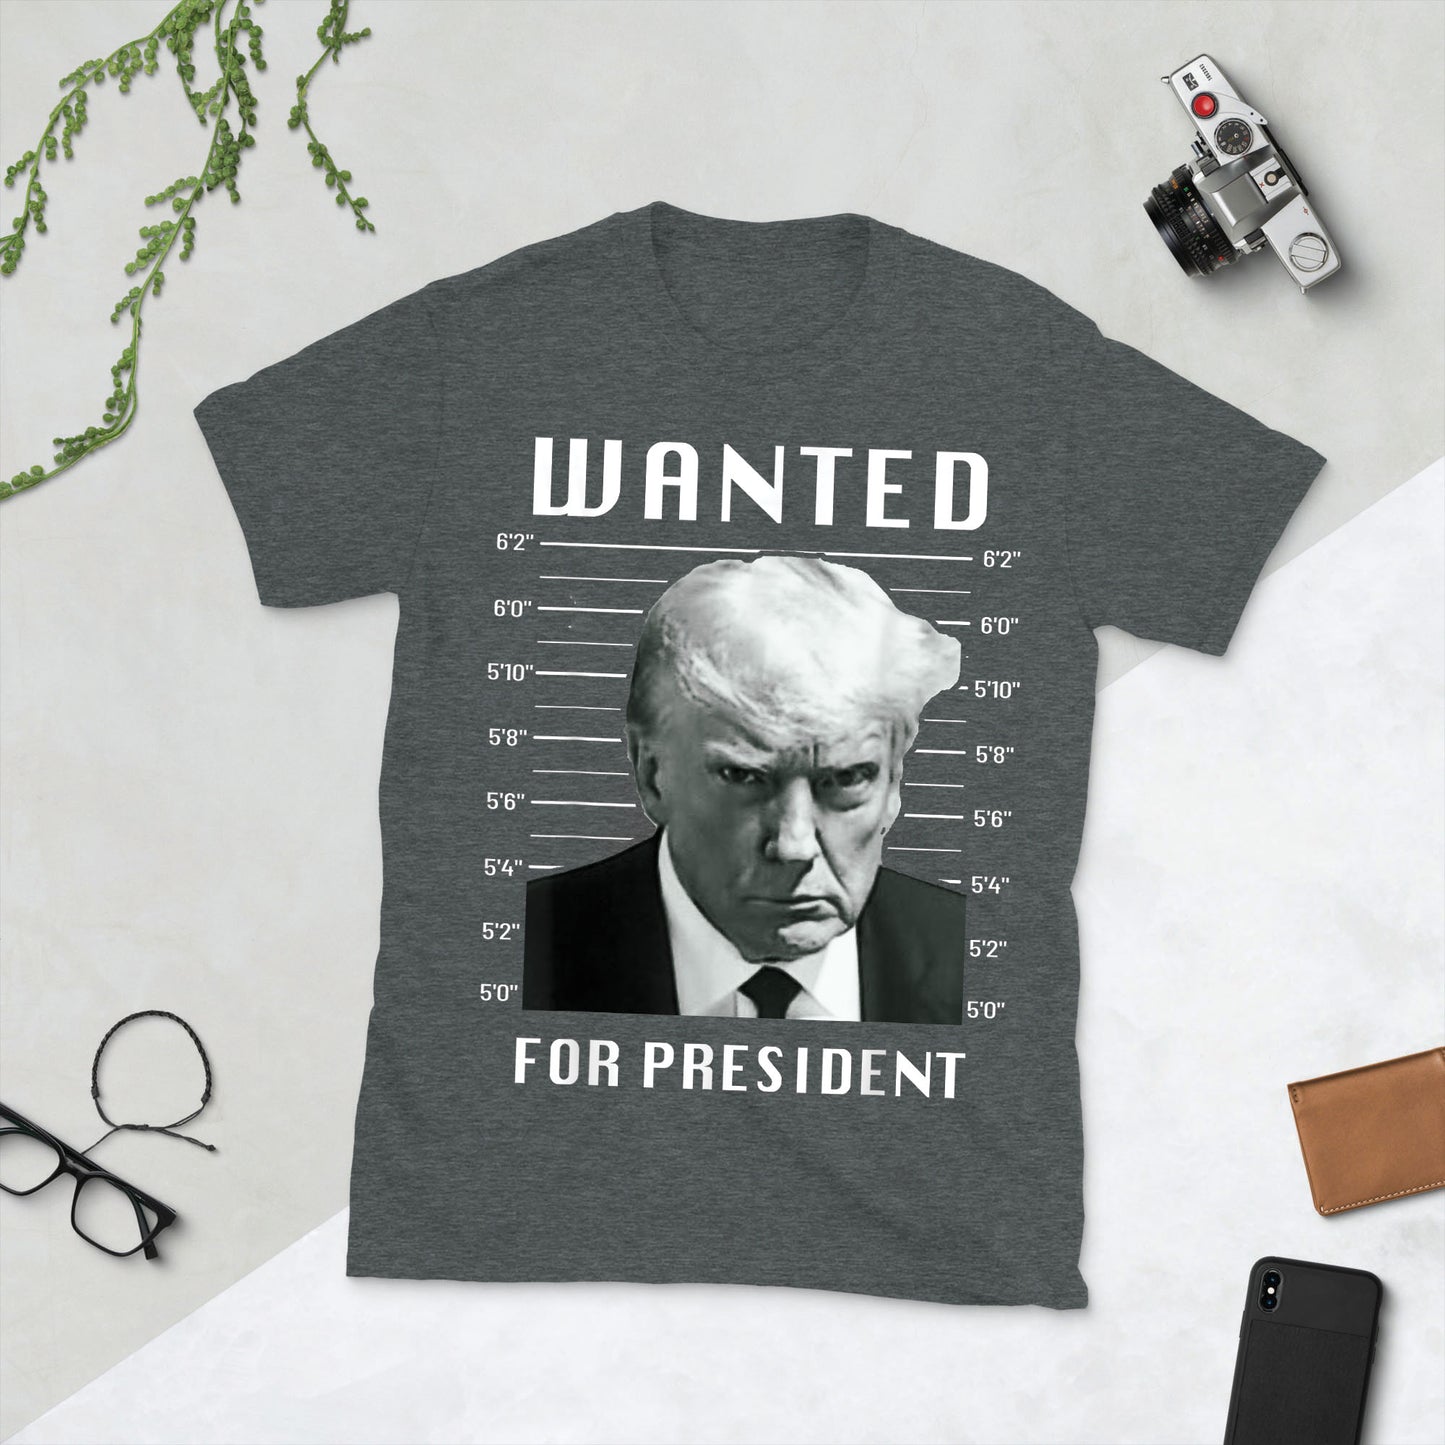 Wanted For President Unisex Short-Sleeve T-Shirt